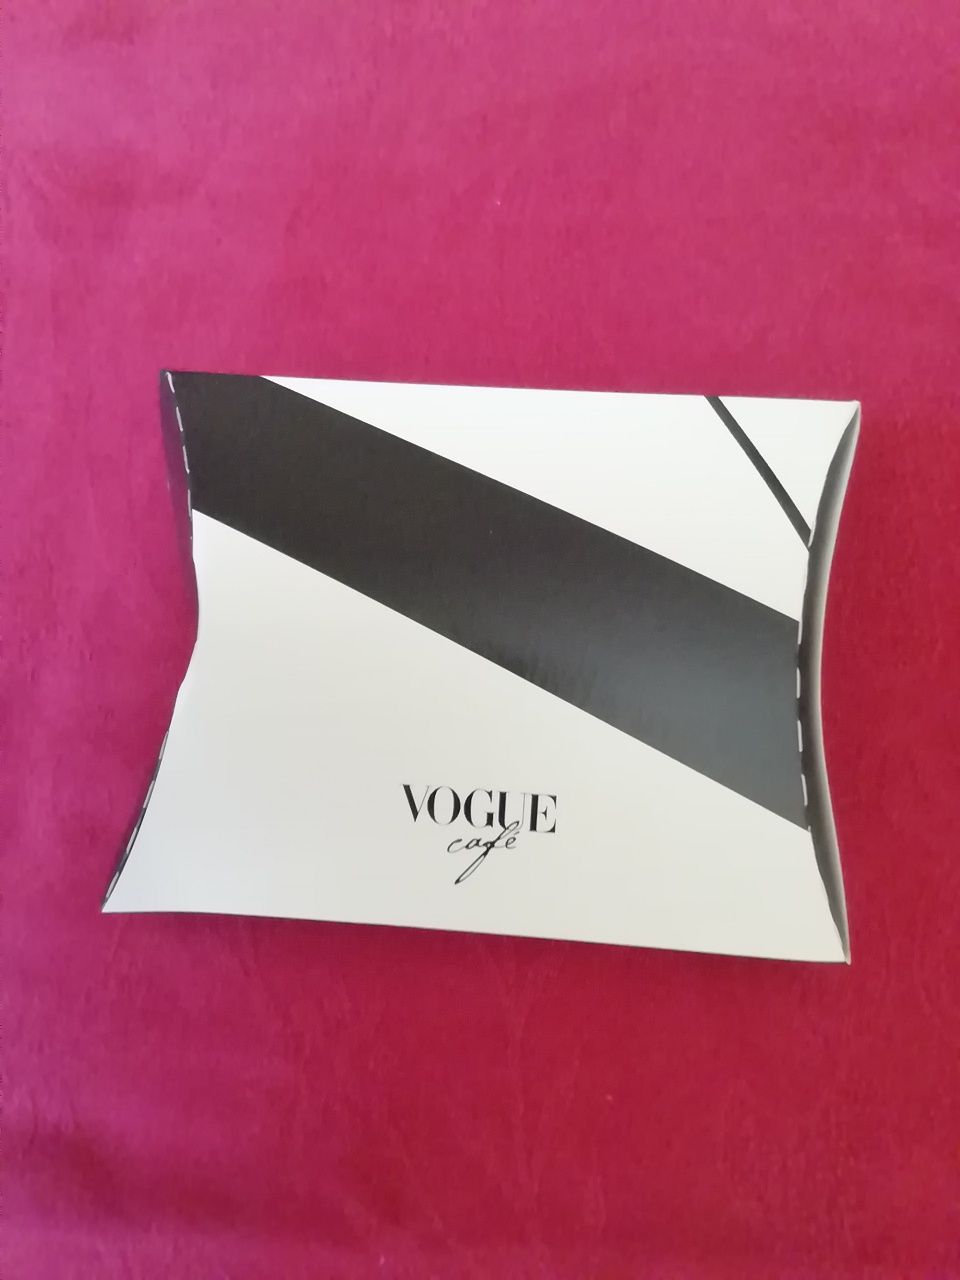 Porta máscara Vogue Café